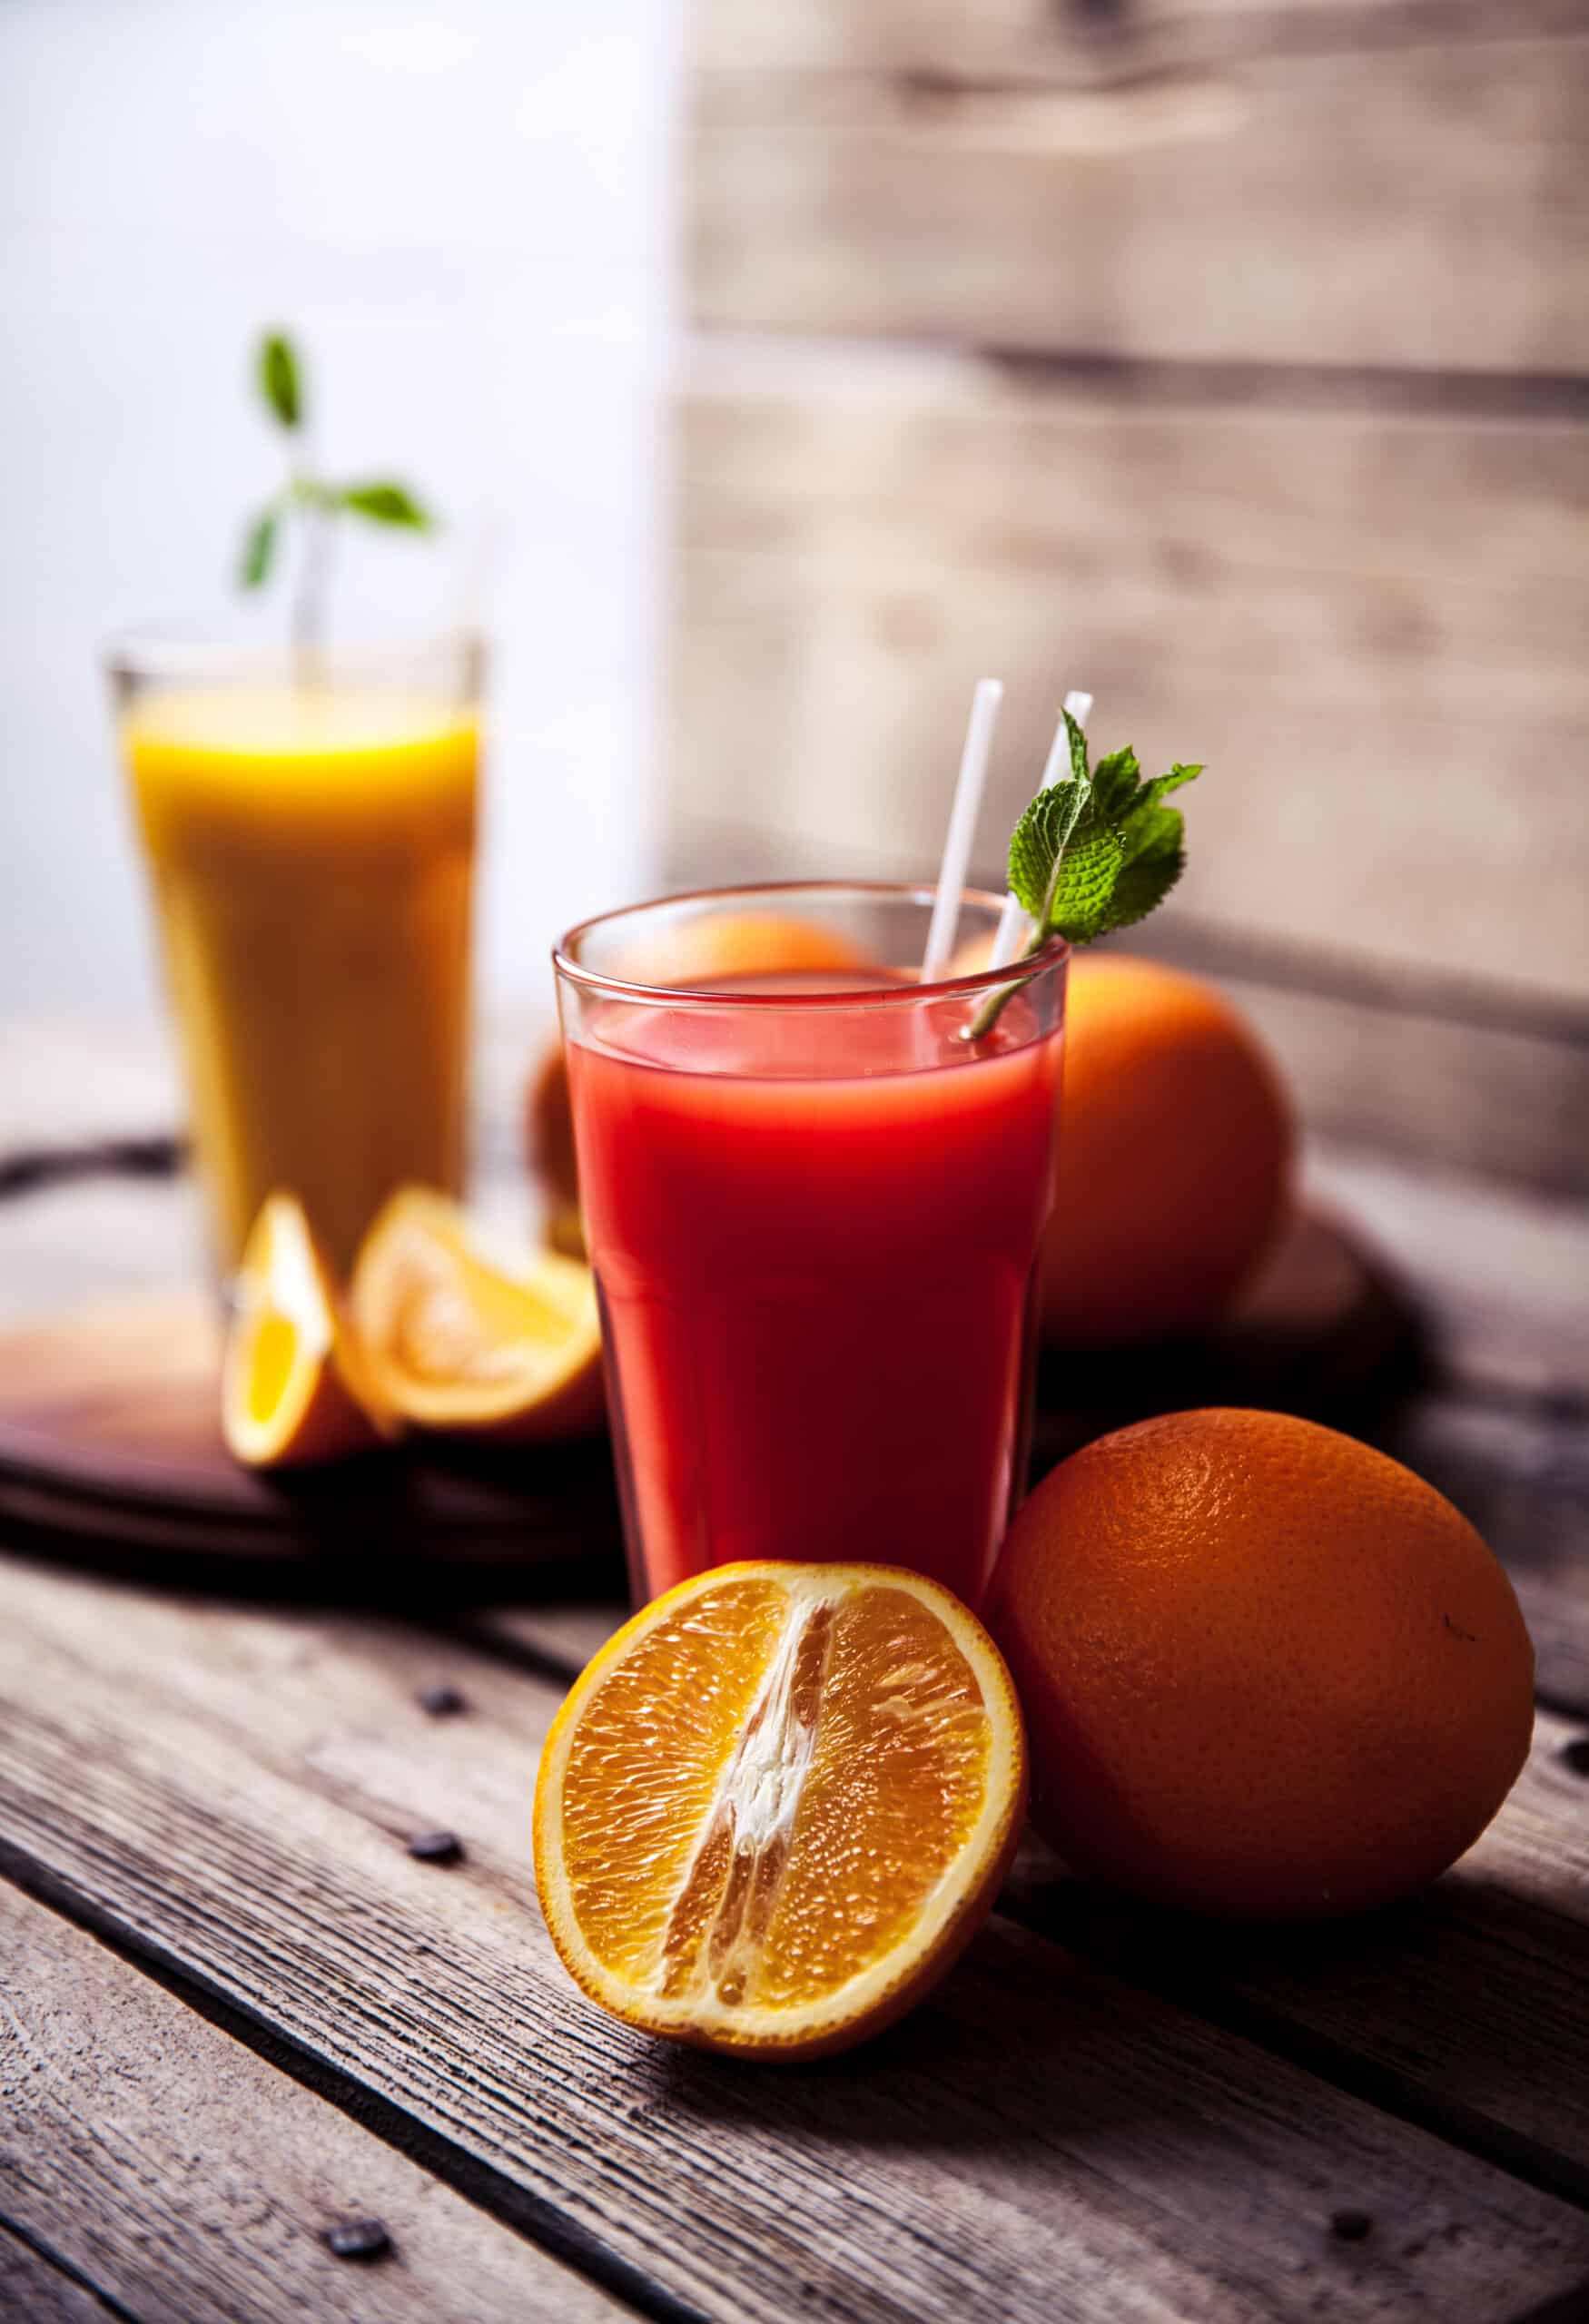 orange-juice-in-glass-with-mint-fresh-fruits-on-w-2021-08-26-18-09-17-utc-scaled.jpg